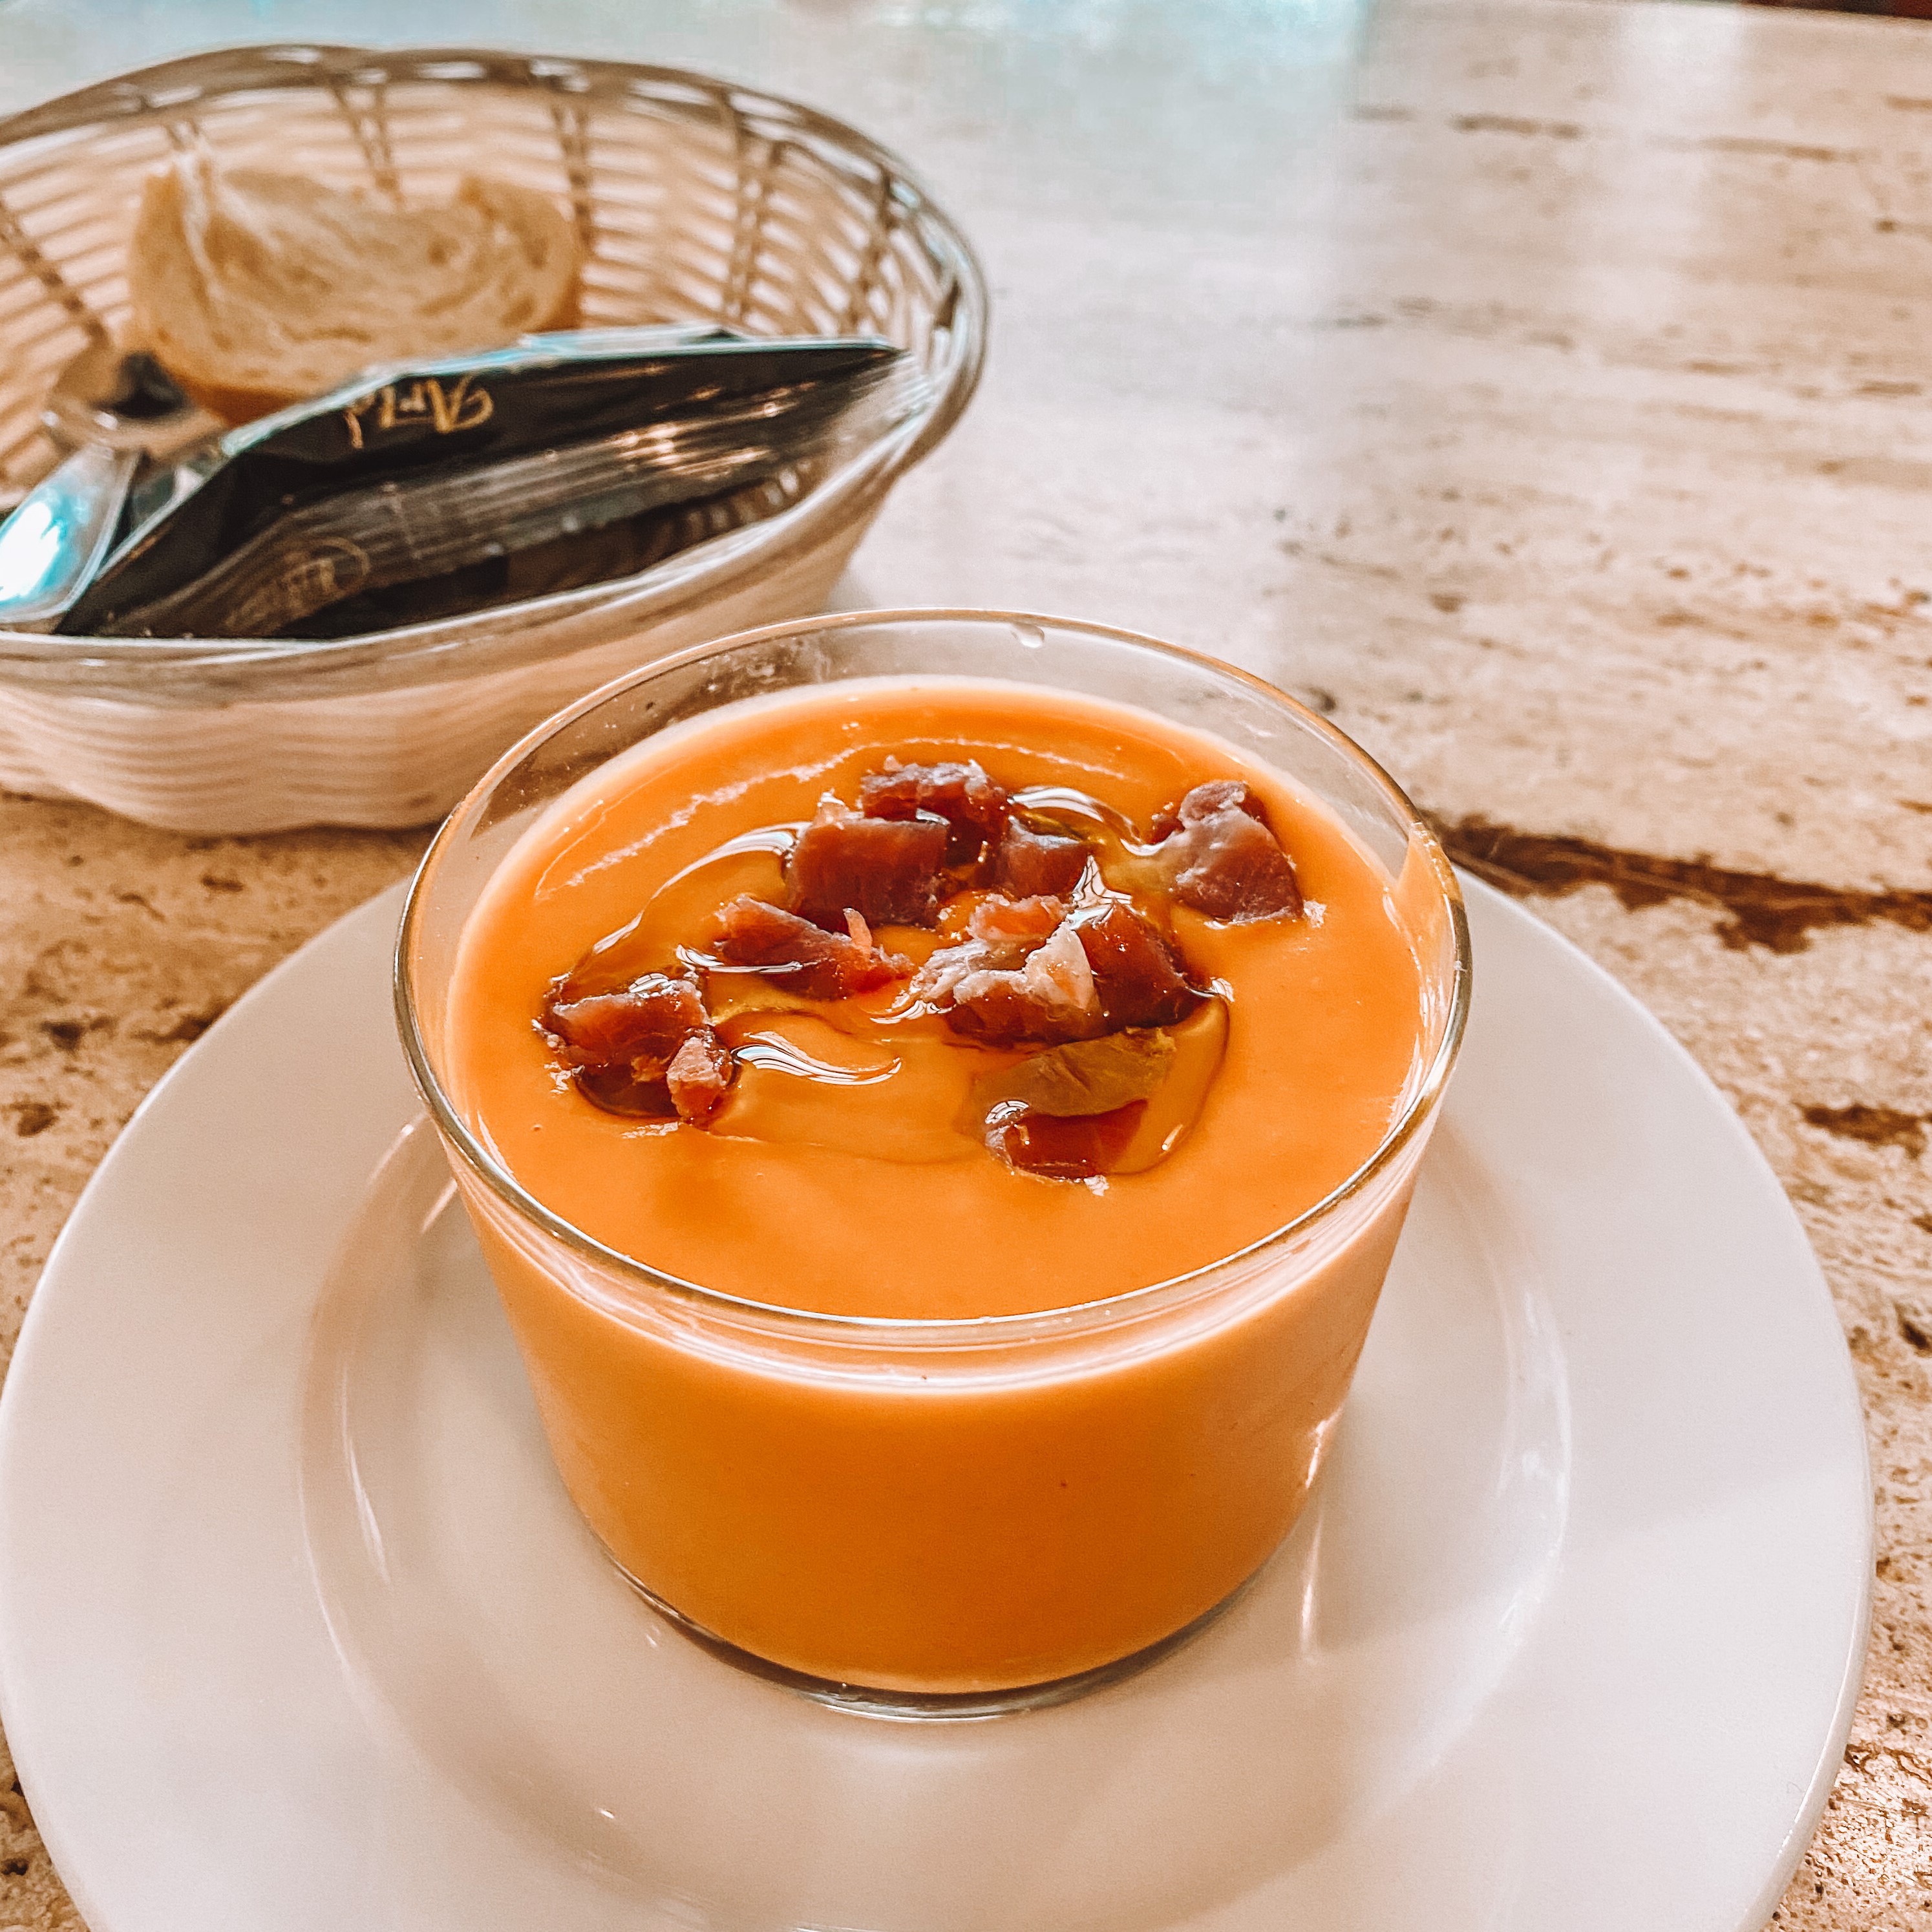 Creamy bowl of salmorejo with Spanish olive oil and jamon